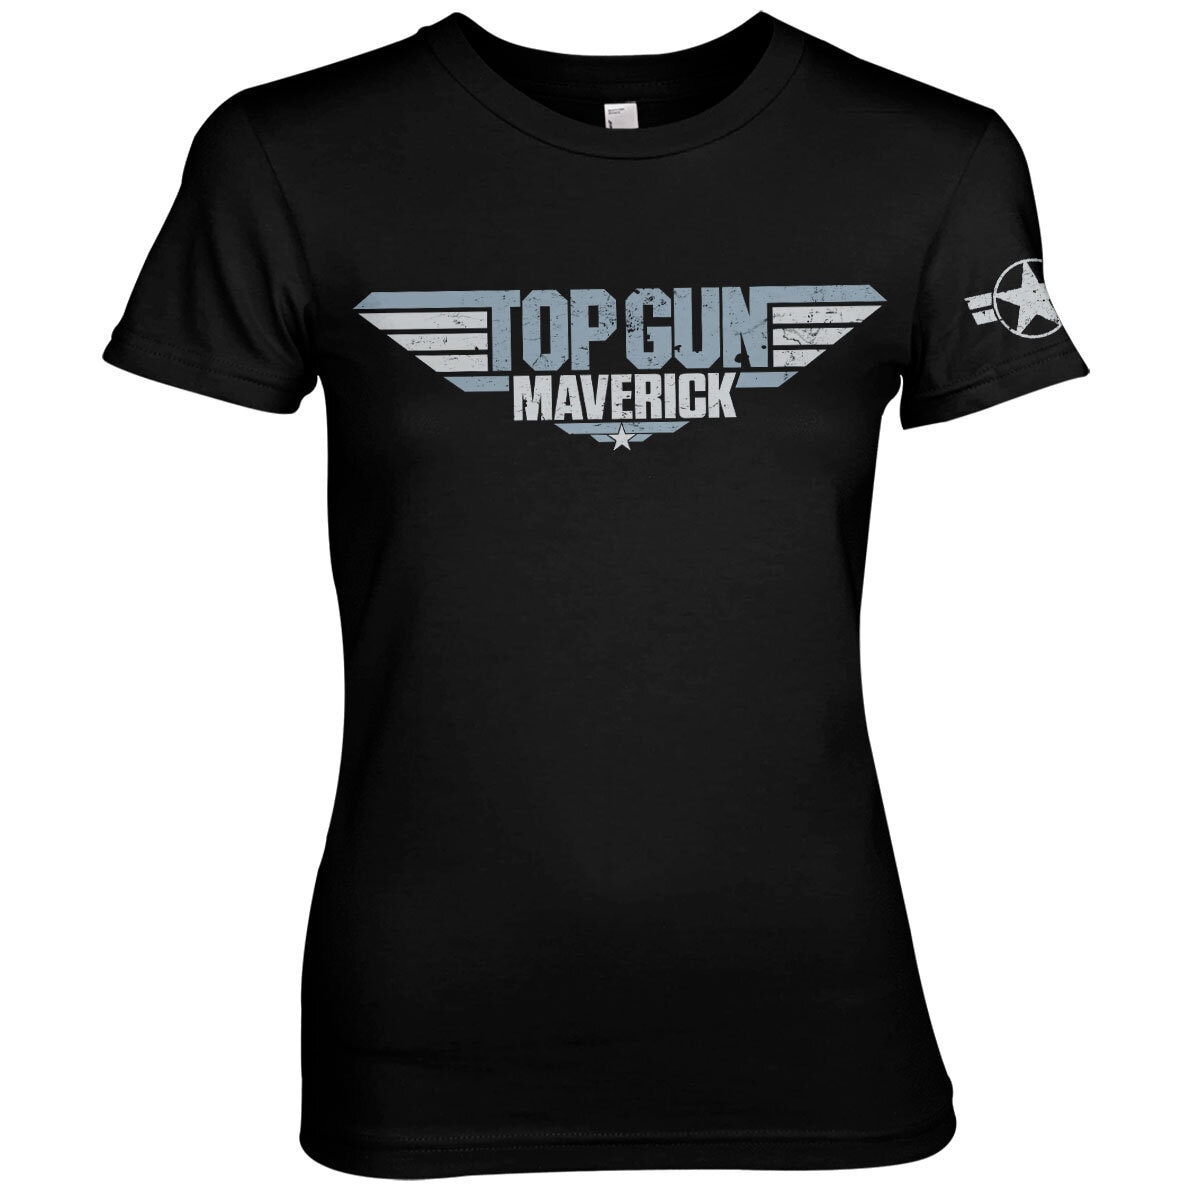 Top Gun Maverick png images | Klipartz